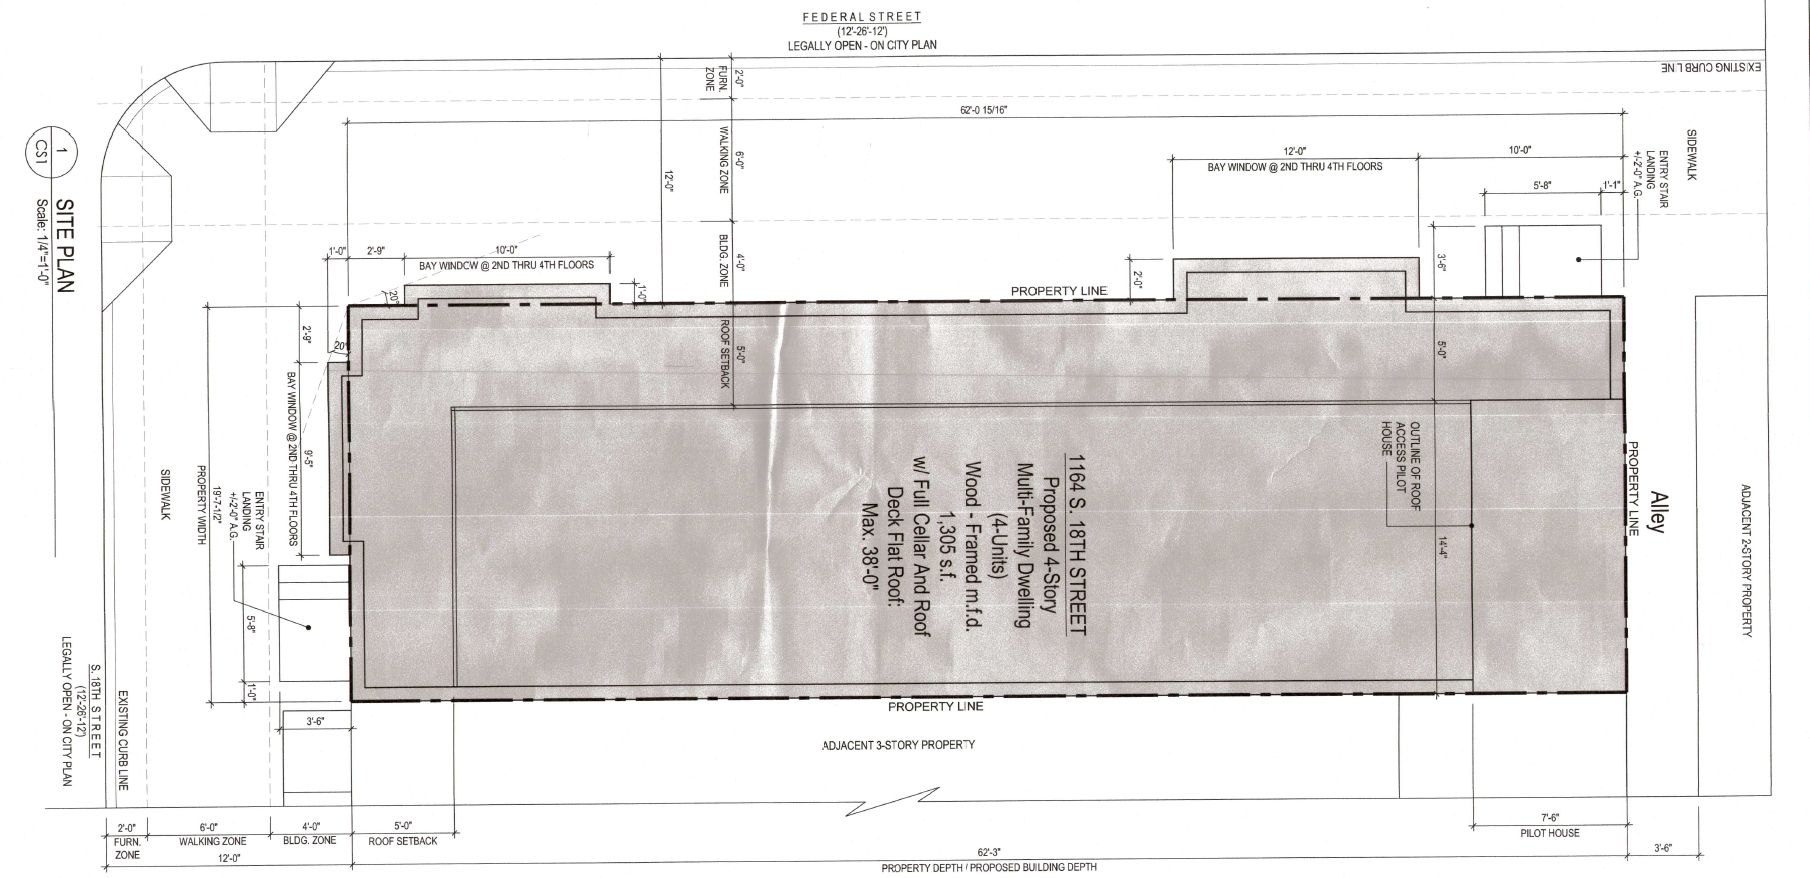 1164 South 18th Street. Site plan. Credit: 24/7 Design Group LLC via the City of Philadelphia